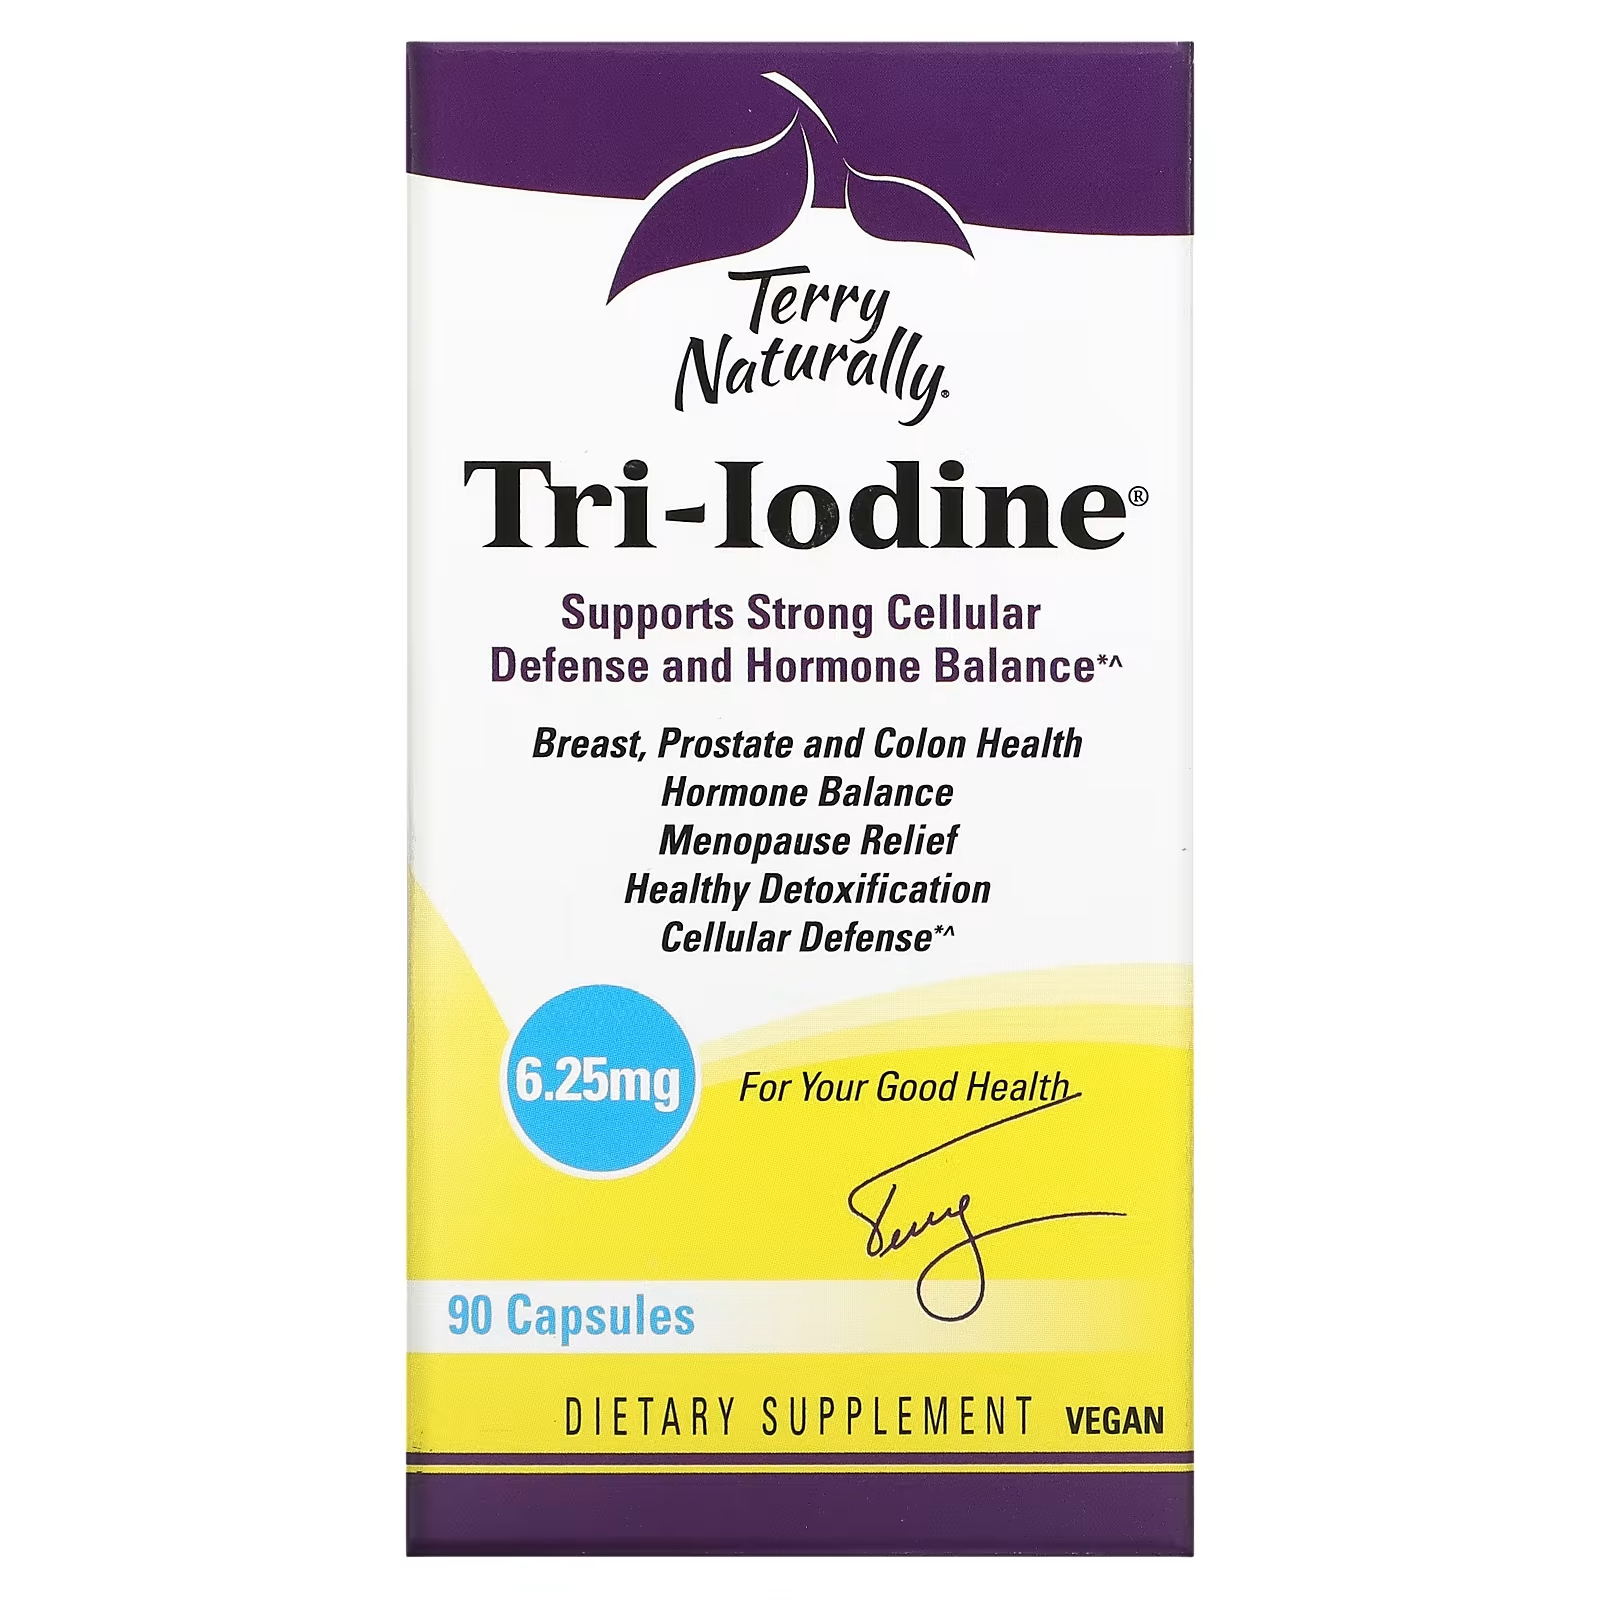 Пищевая Добавка Terry Naturally Tri-Iodine, 90 капсул europharma terry naturally terry naturally tri iodine 12 5 мг 90 капсул